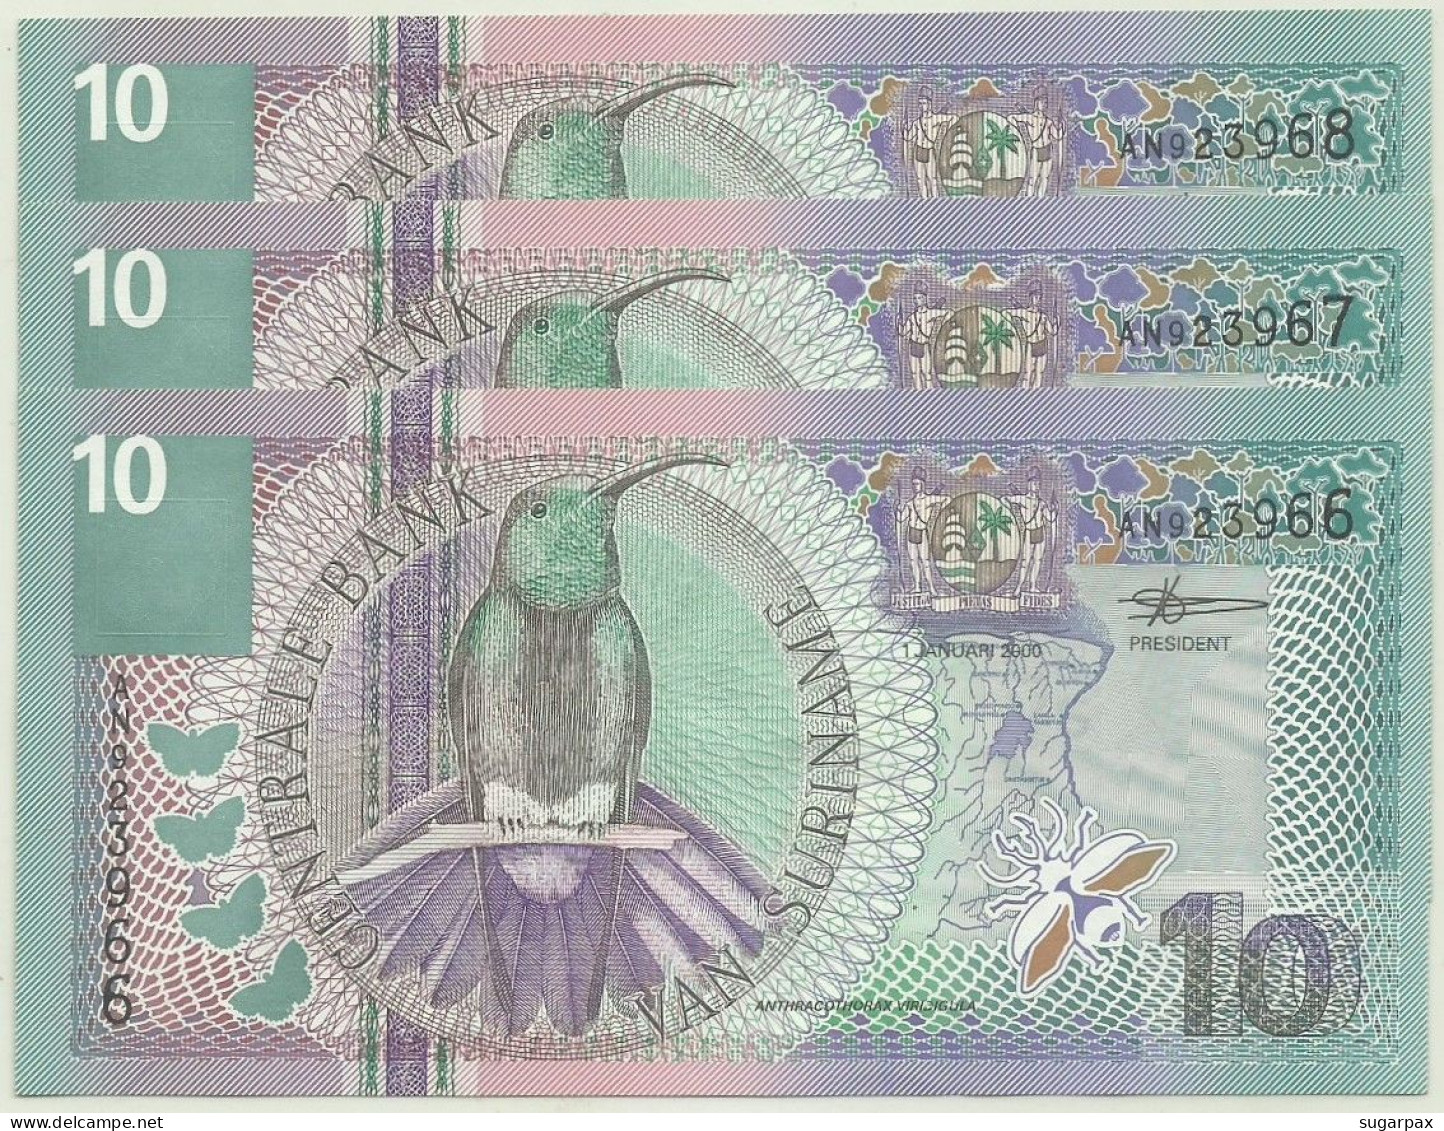 Suriname - 3 X 10 Gulden - 1 Januari 2000 - Pick 147 - Unc. - Serie AN - Suriname